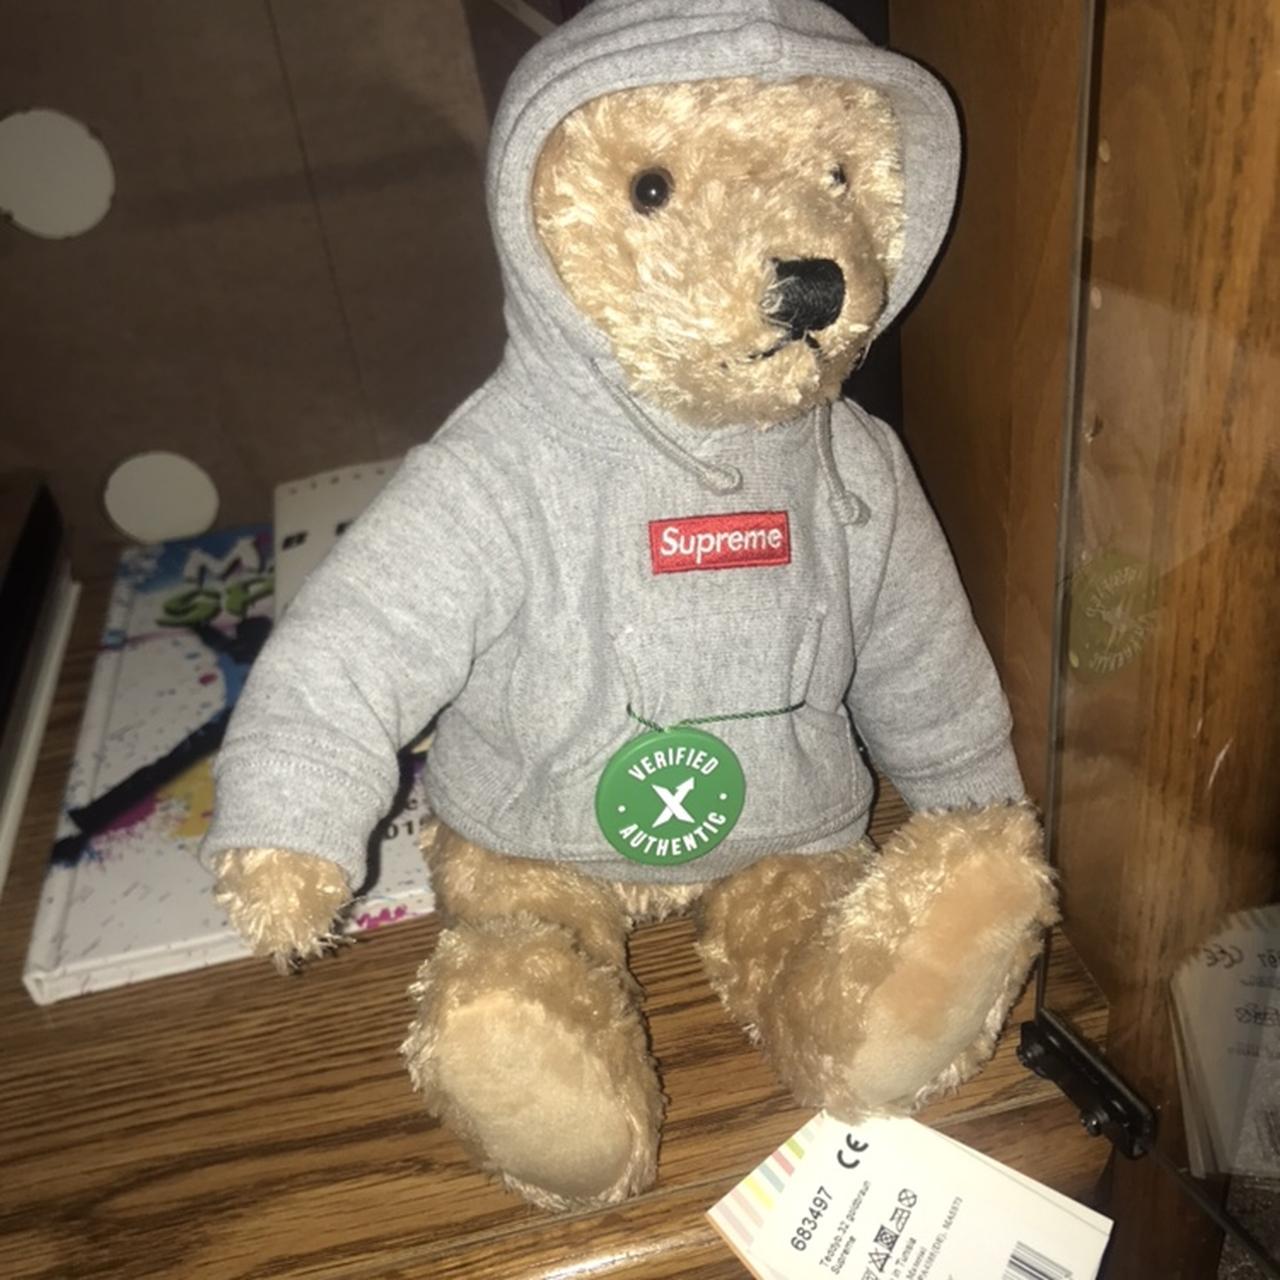 Supreme teddy bear, -deadstock, -stockx verified